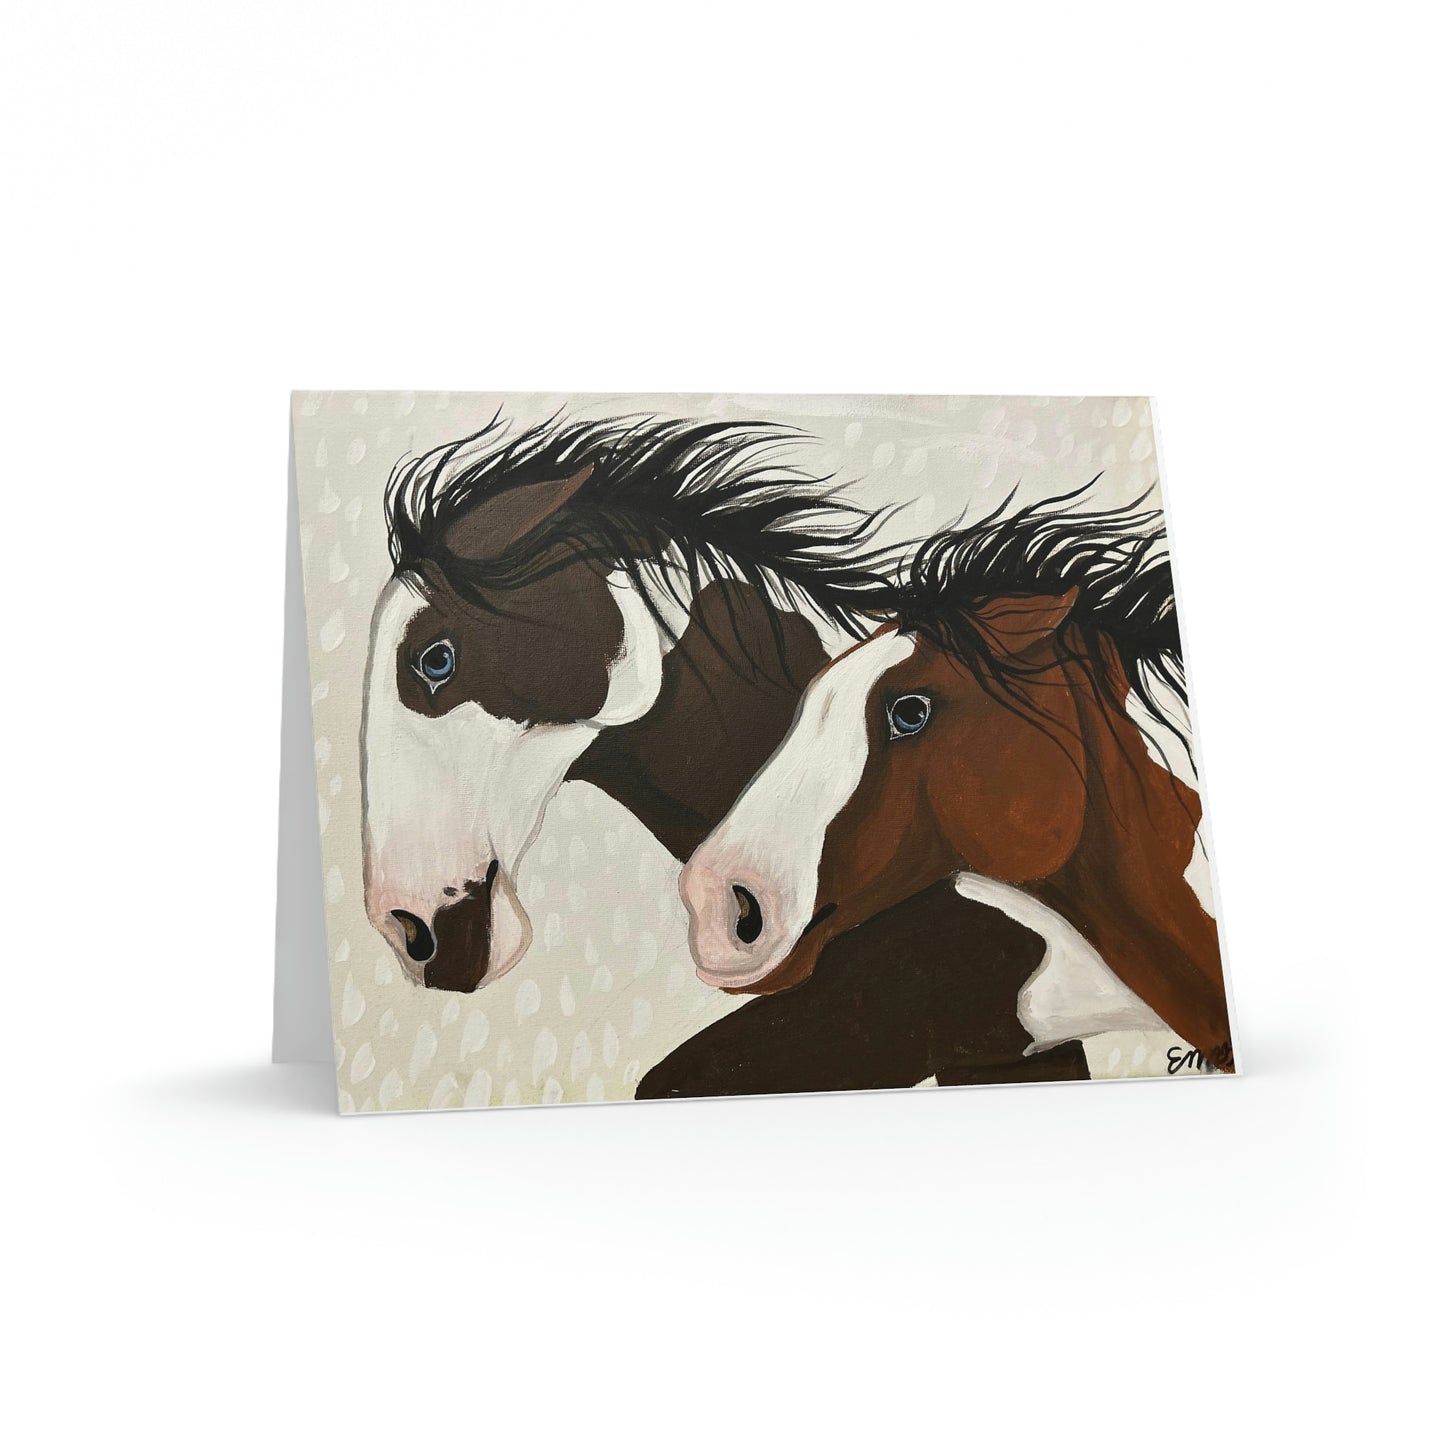 Debbie’s Horses - Greeting cards